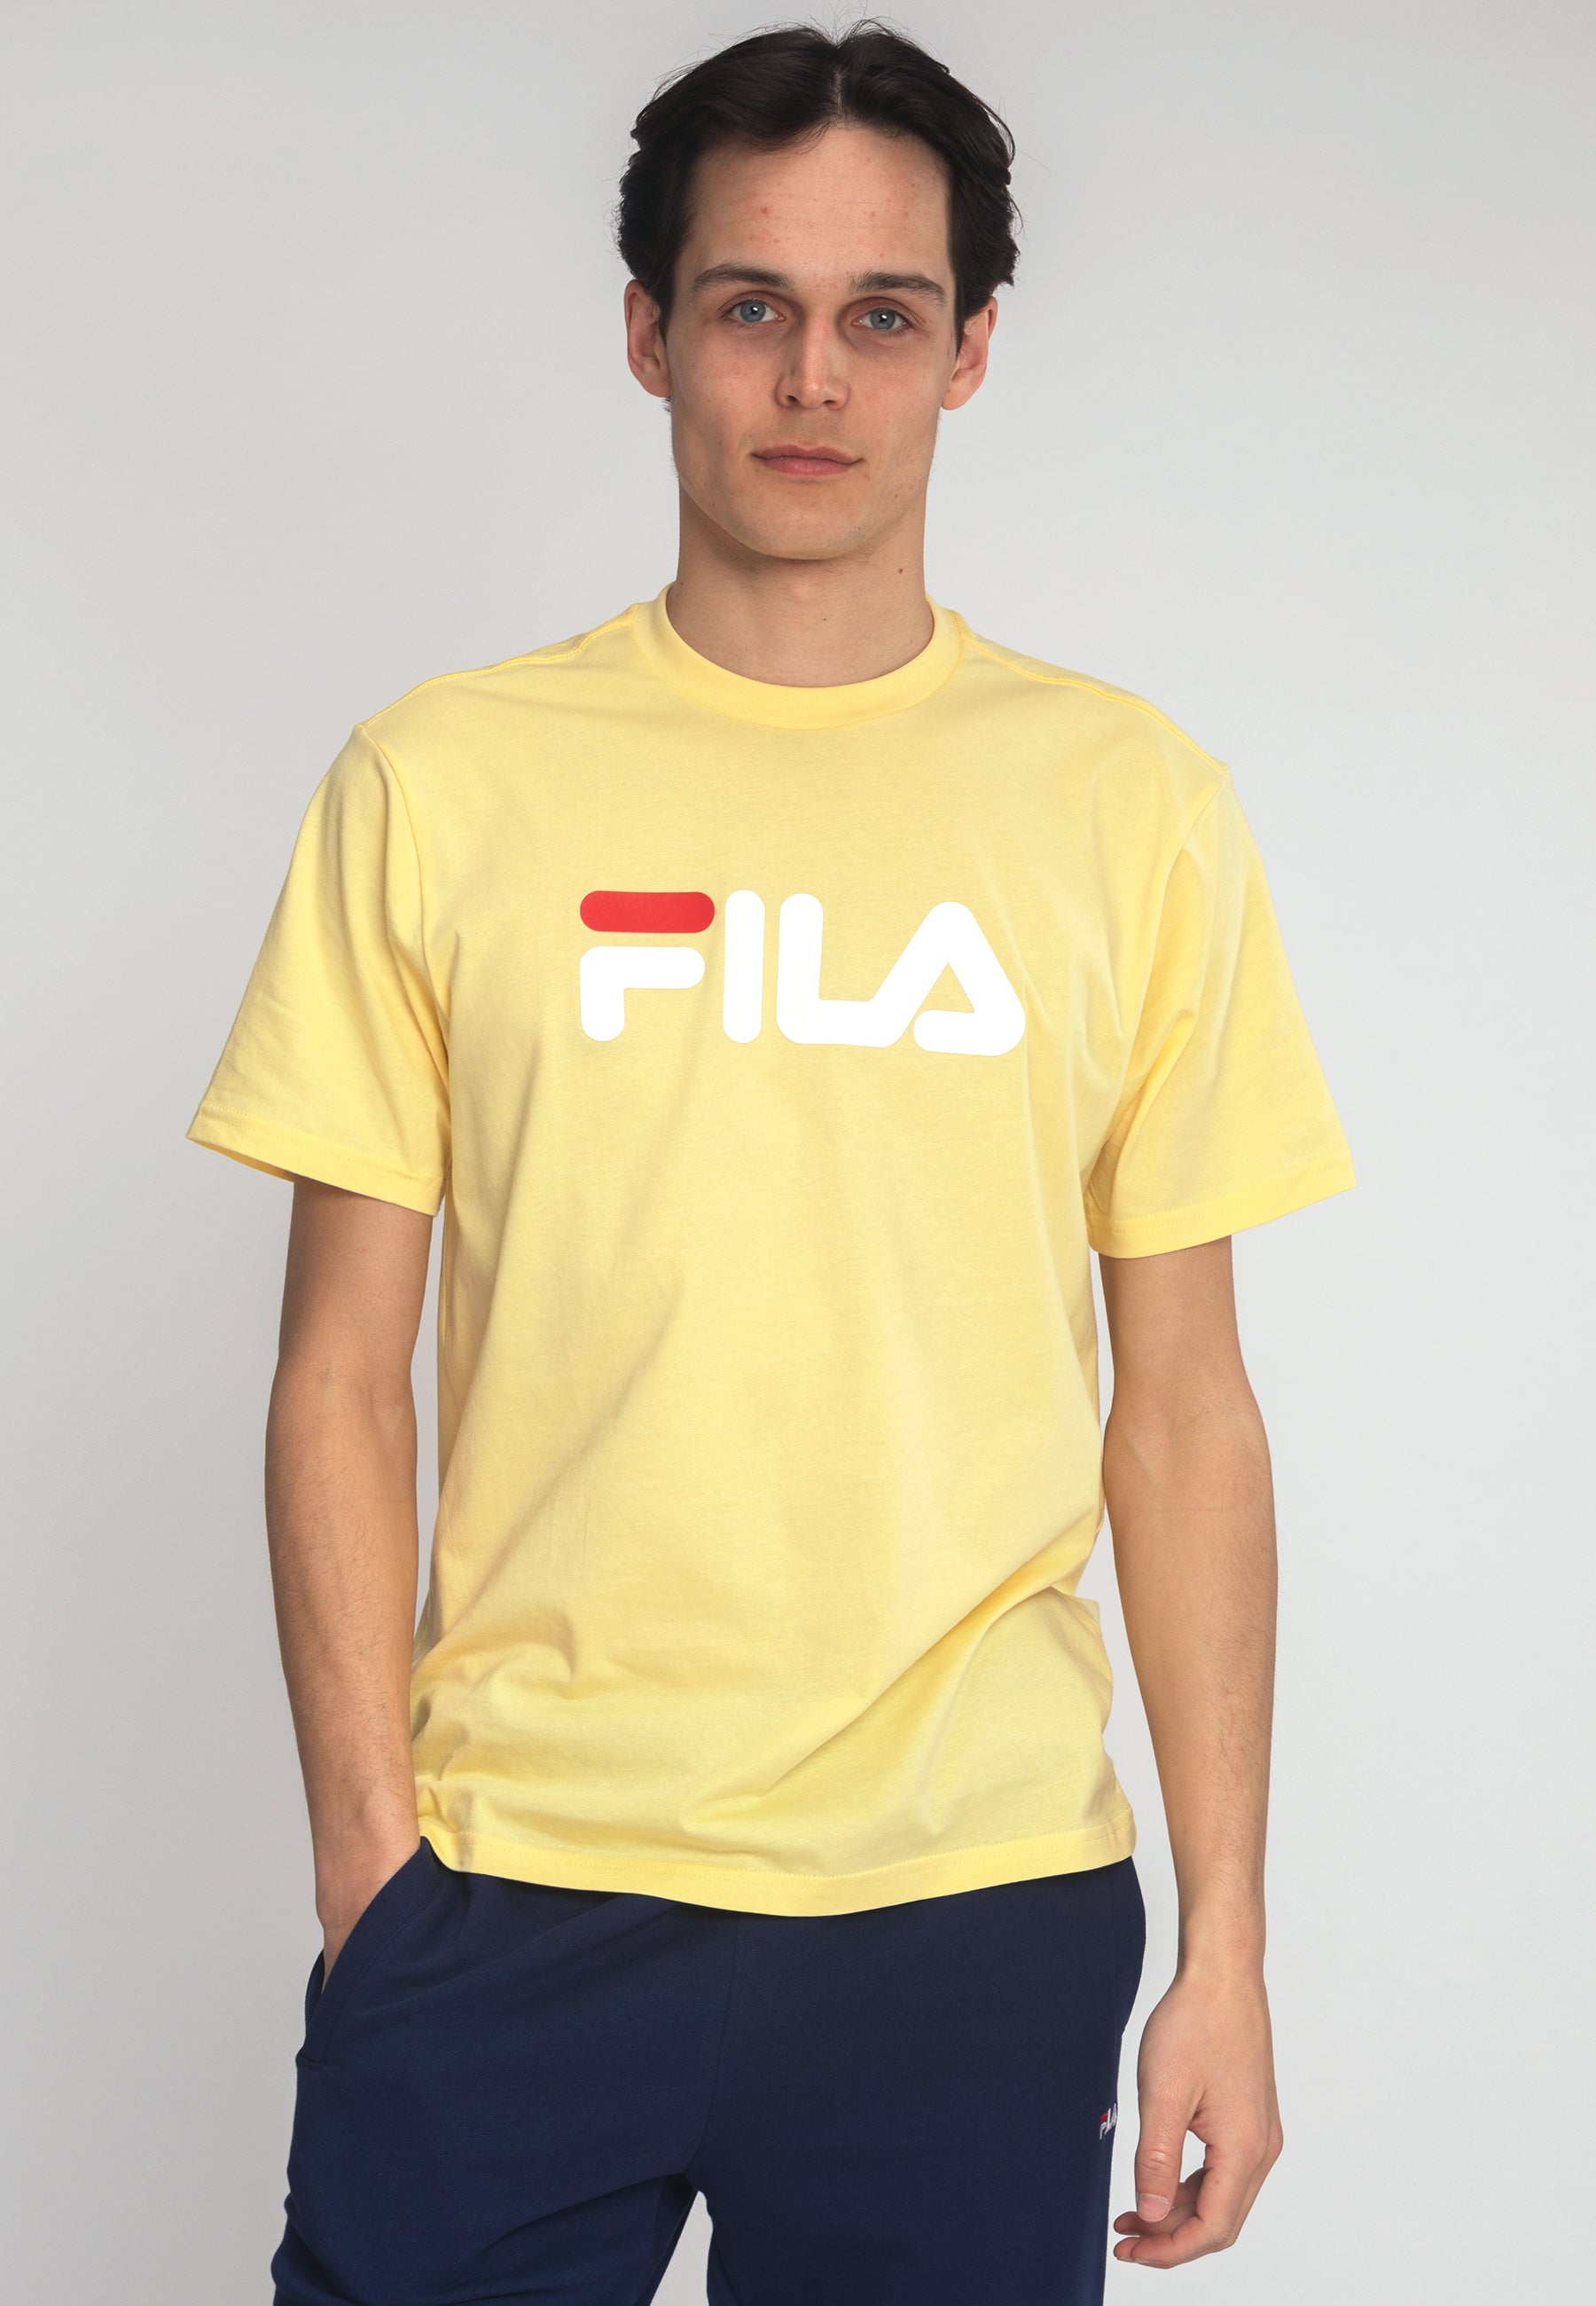 Bellano Tee in Pale Banana T-Shirts Fila   